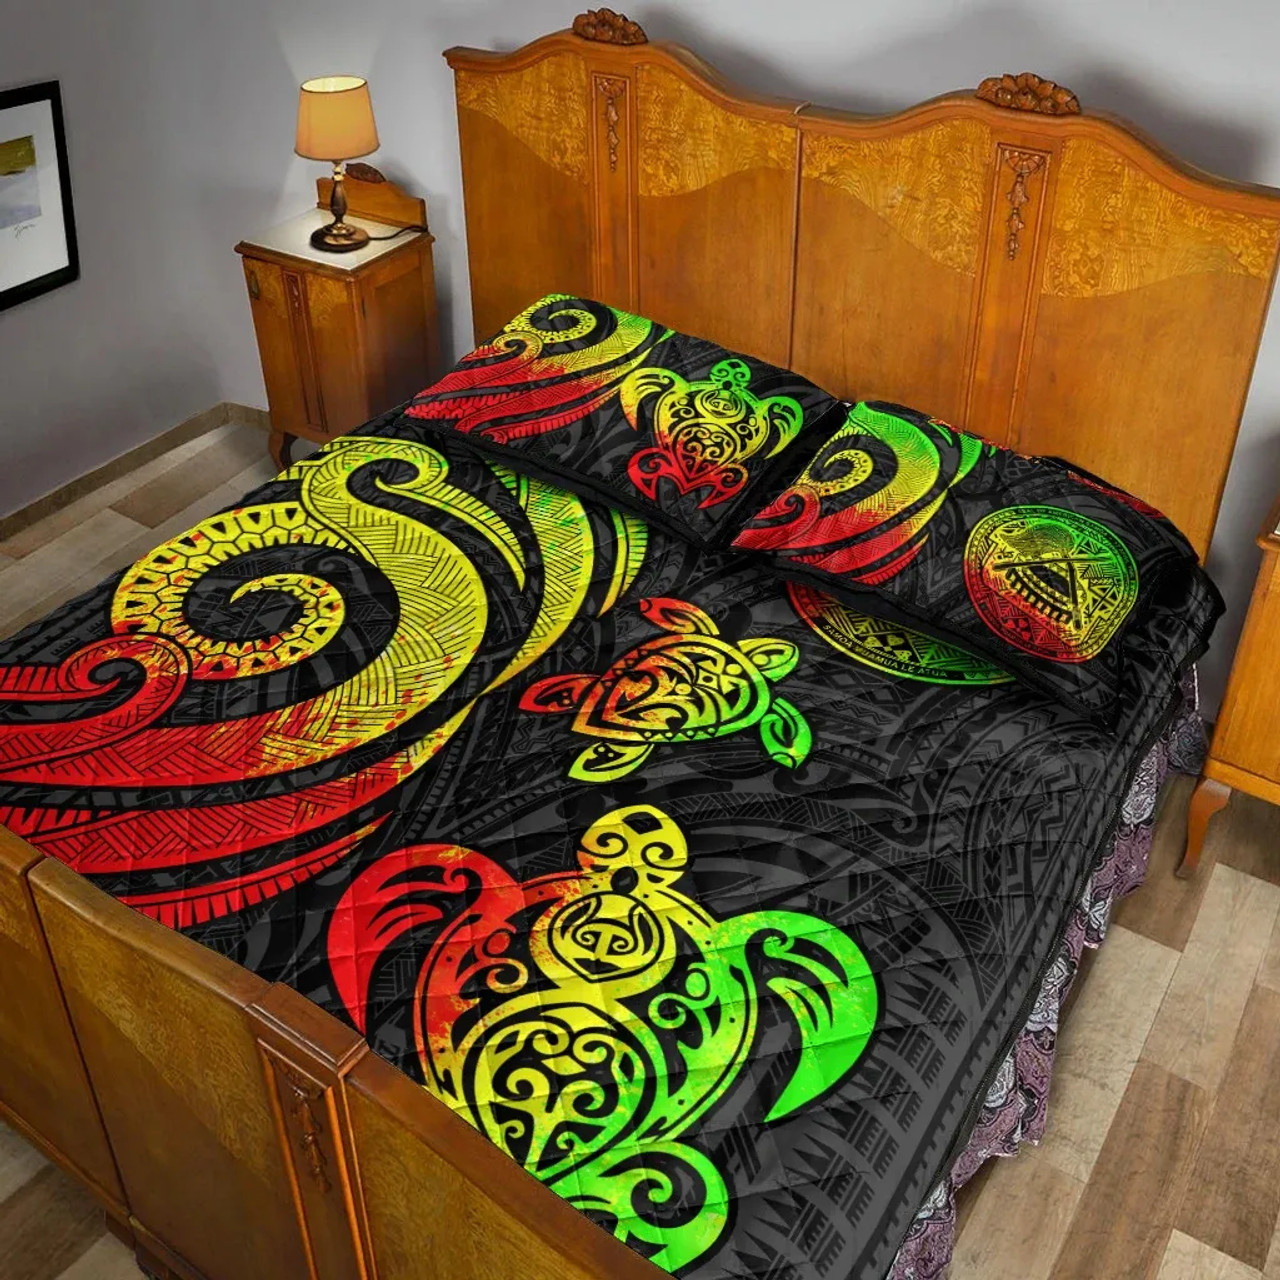 American Samoa Quilt Bed Set - Reggae Tentacle Turtle 4